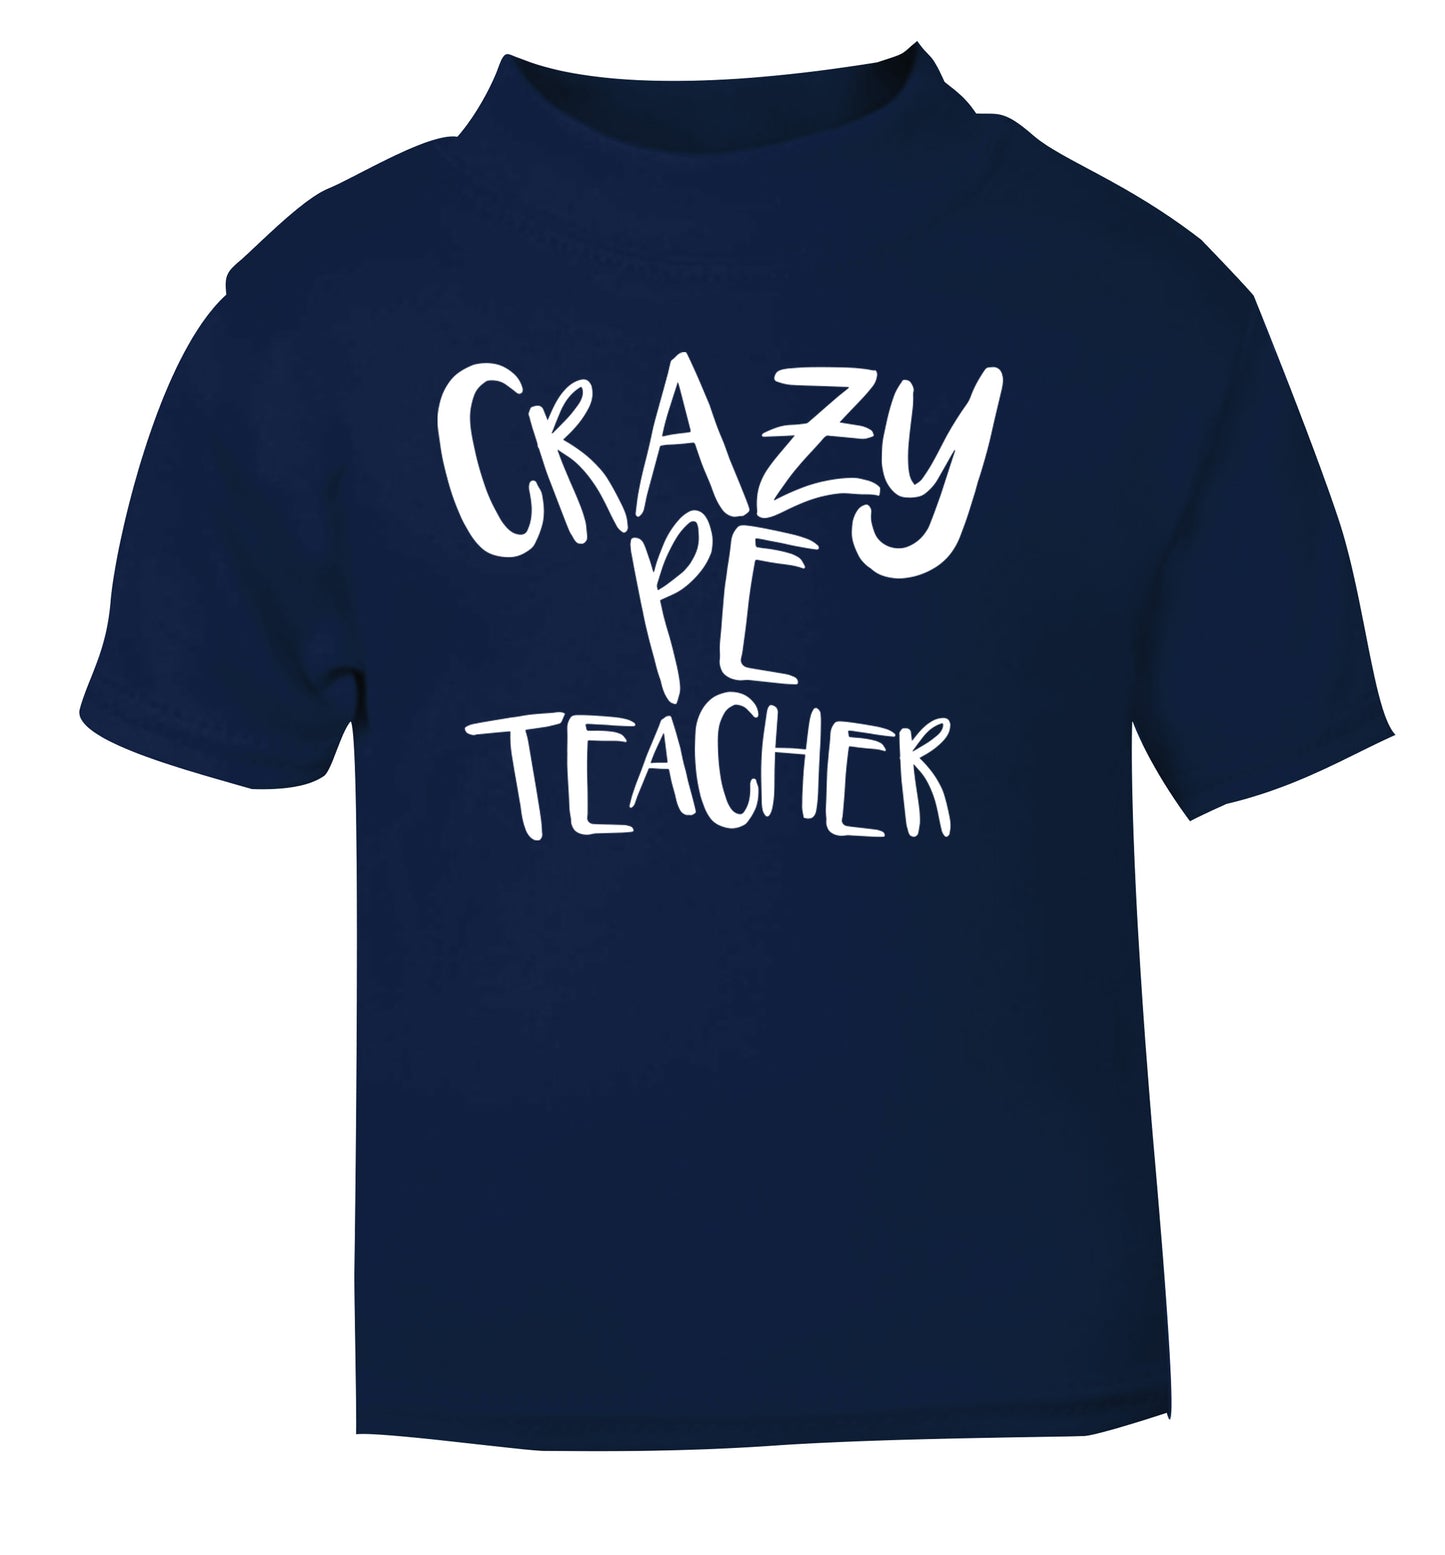 Crazy PE teacher navy Baby Toddler Tshirt 2 Years